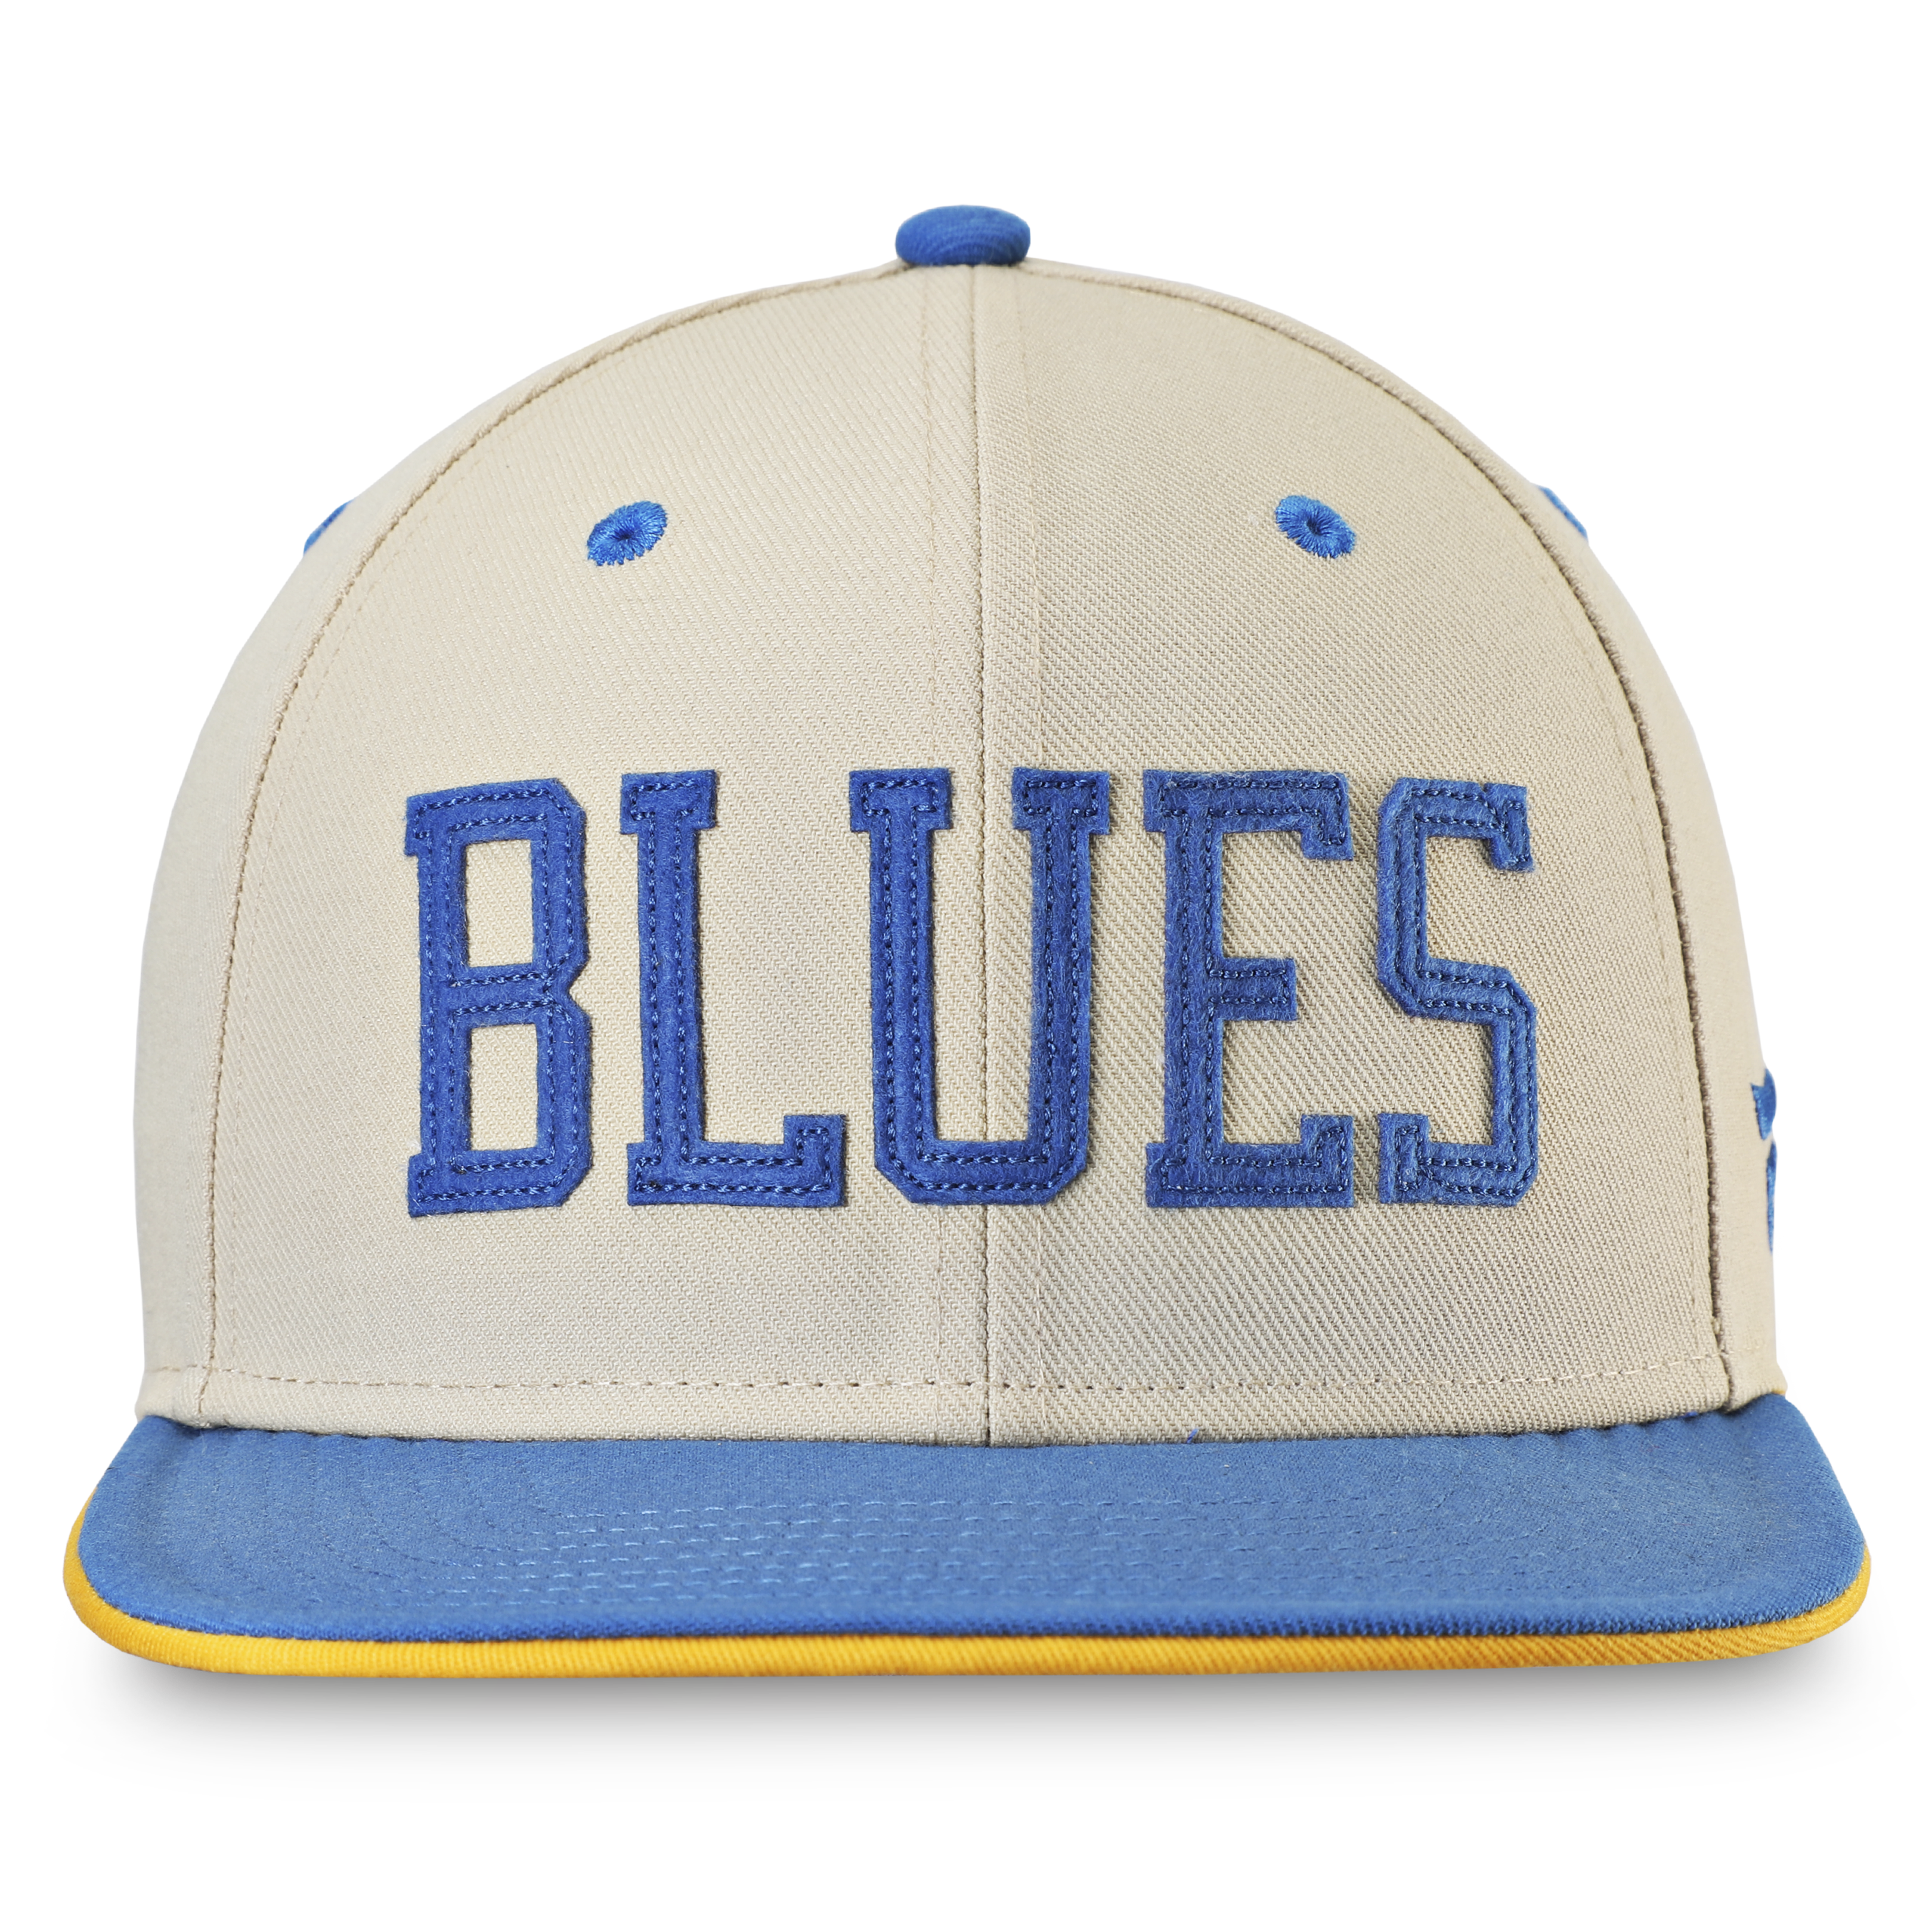 NHL ST. LOUIS BLUES HYBRID UNISEX SNAPBACK HAT (MIDNIGHT NAVY) – Pro  Standard